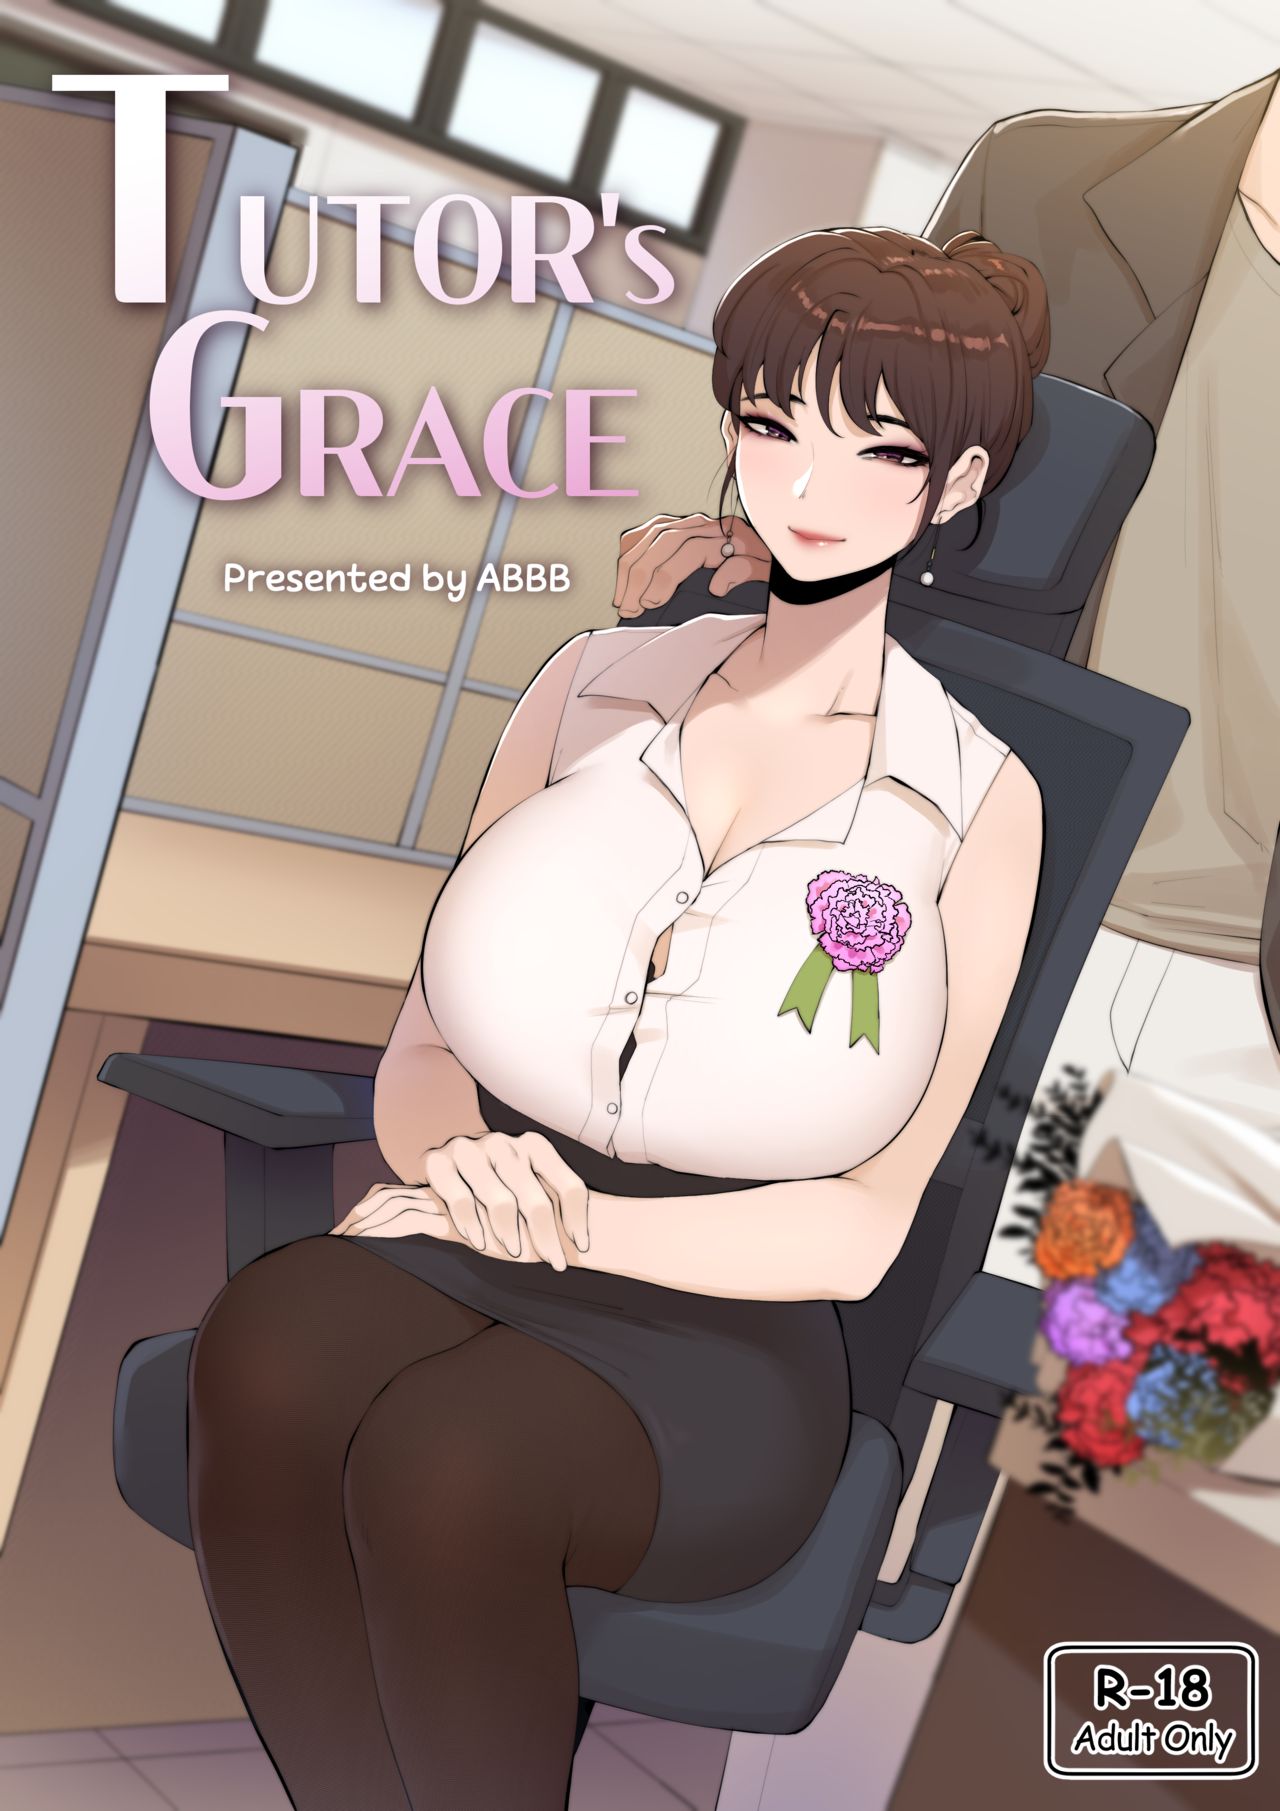 Anime Tutor Porn - Tutor's Grace â€“ abbb - Comics Army